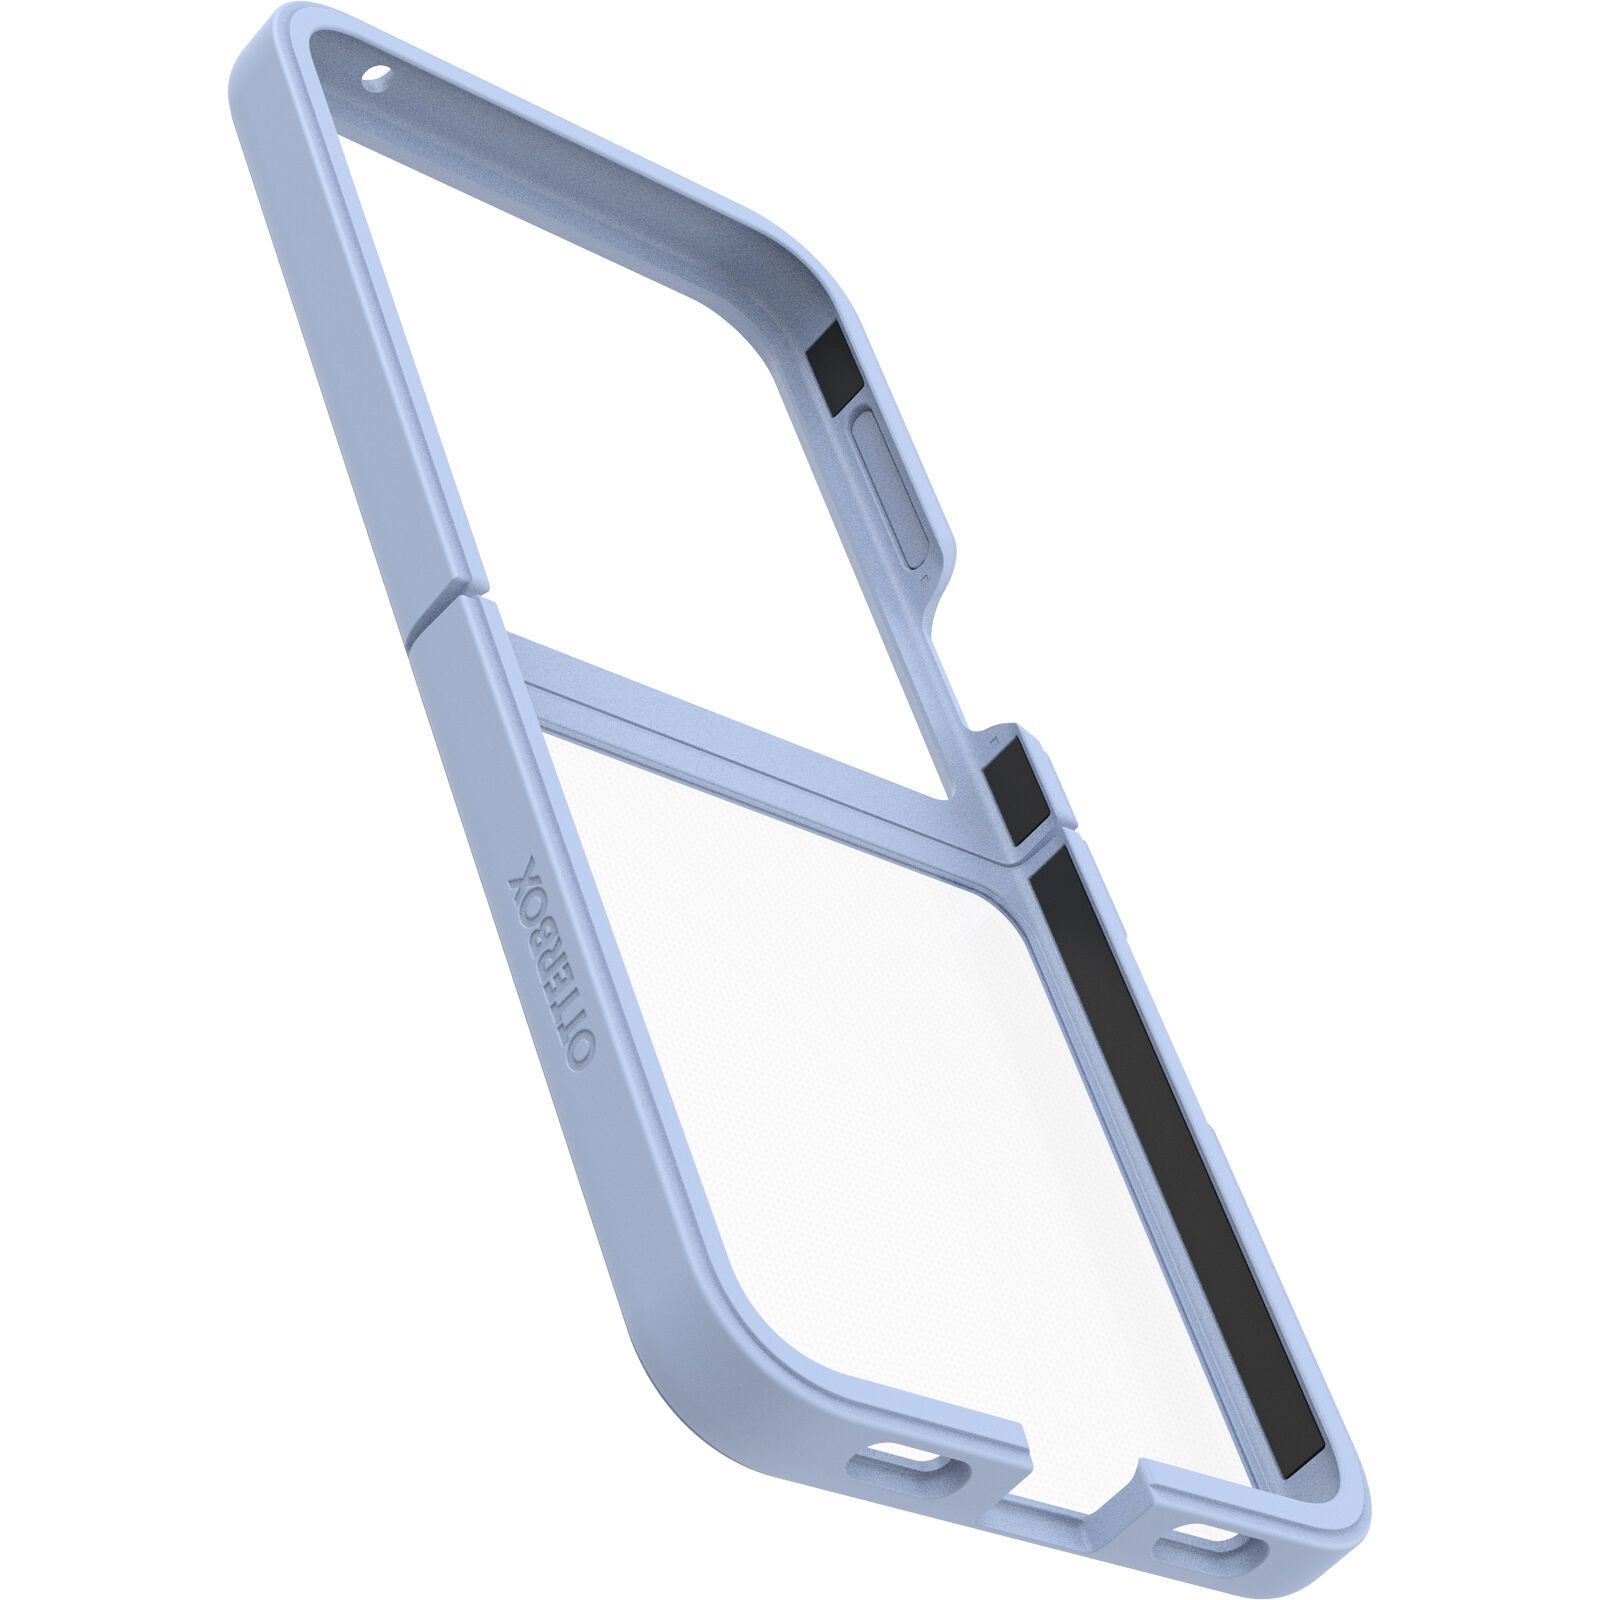 Otterbox รุ่น Thin Flex - เคส Galaxy Z Flip 5 - สี Dream Come Blue